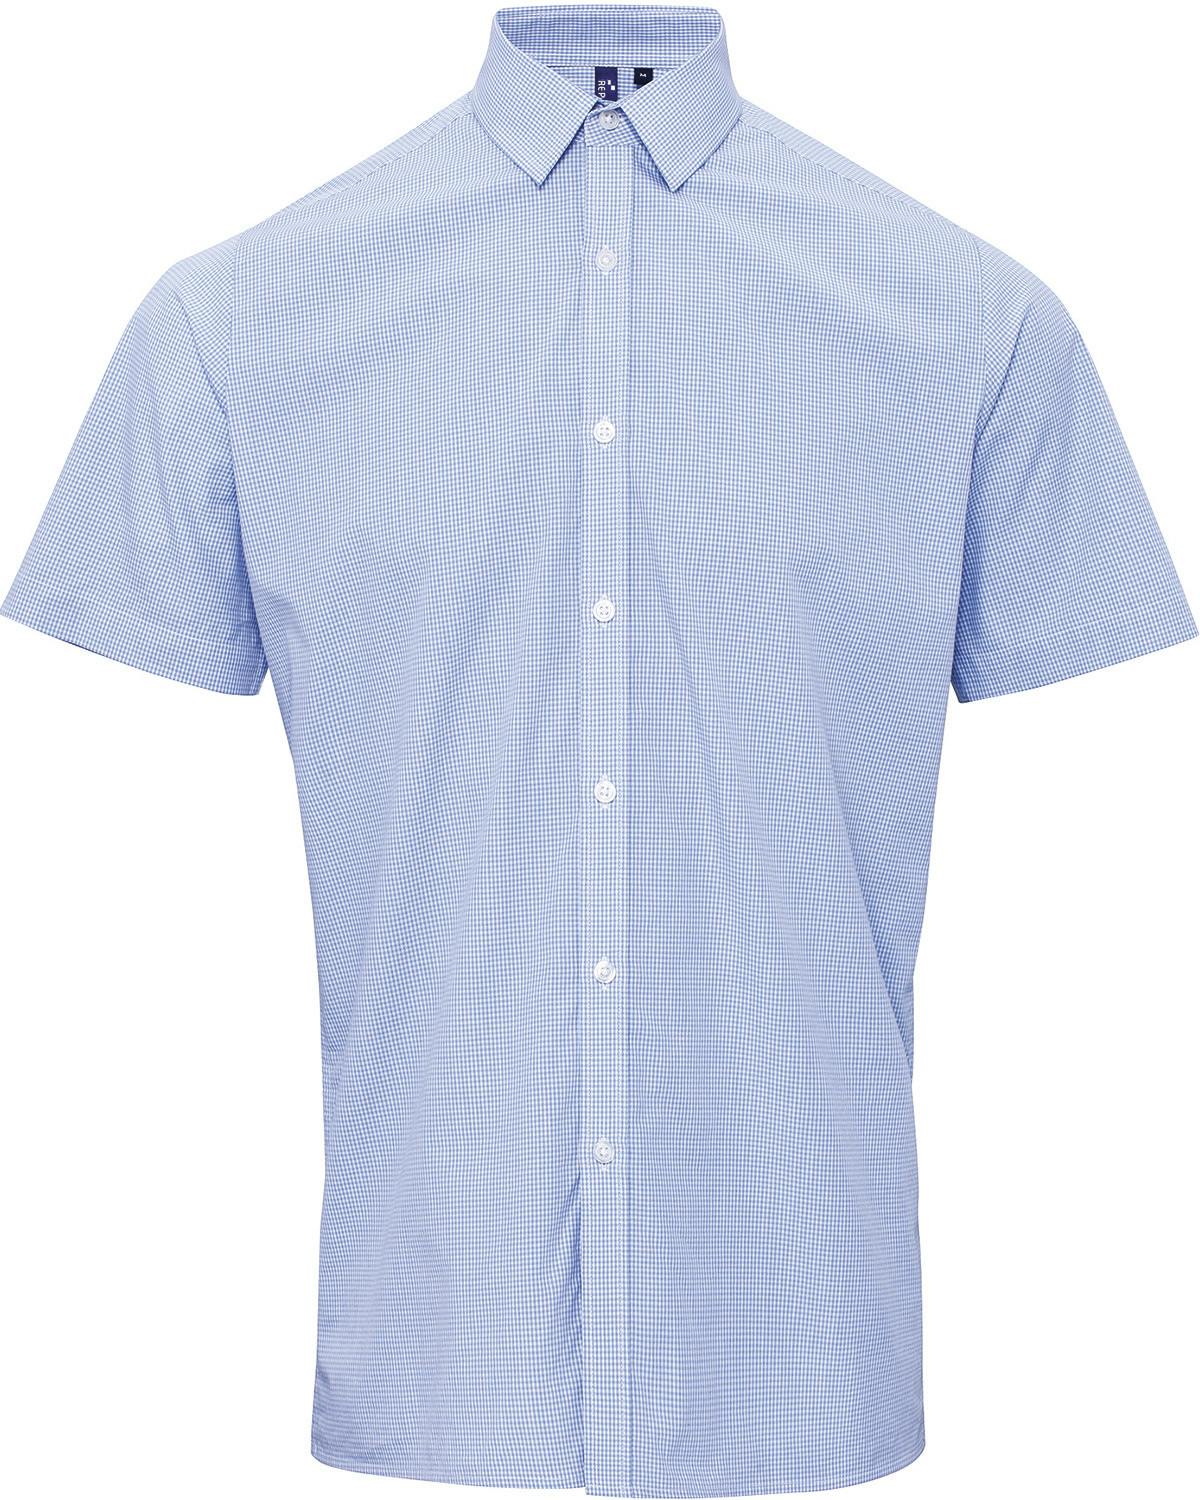 Image for Men's Microcheck Gingham Short-Sleeve Cotton Shirt